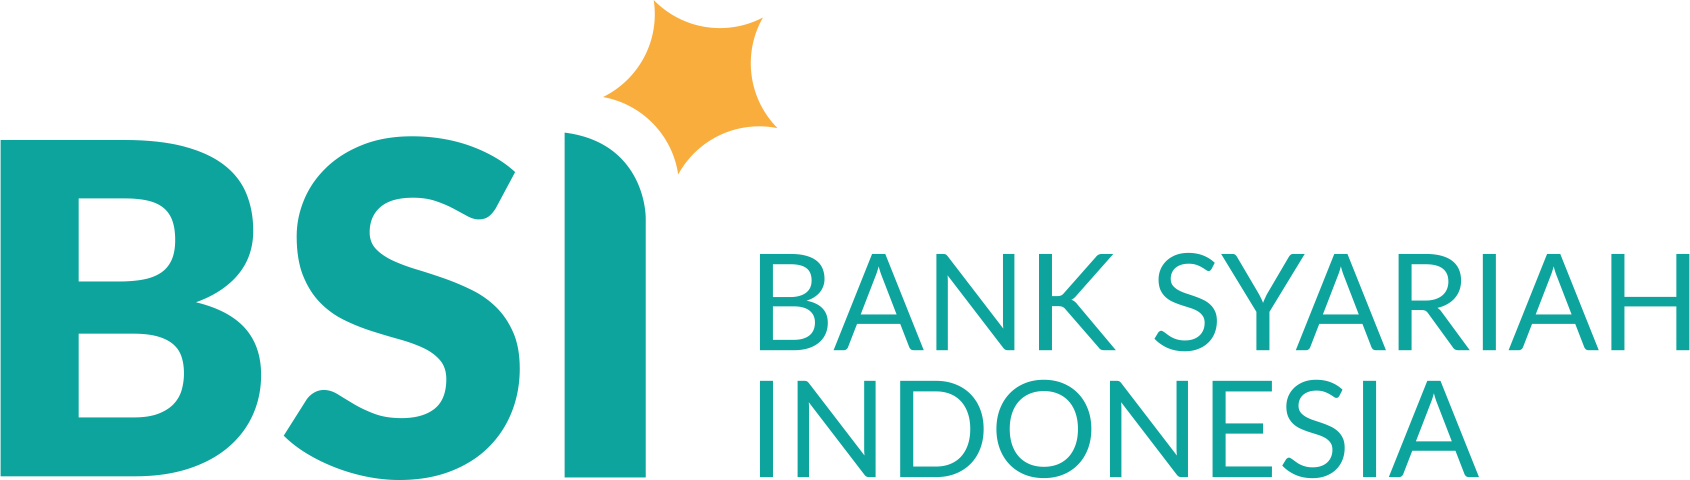 BSI-Bank-Syariah-Indonesia-Logo-PNG480p-Vector69Com-1.png